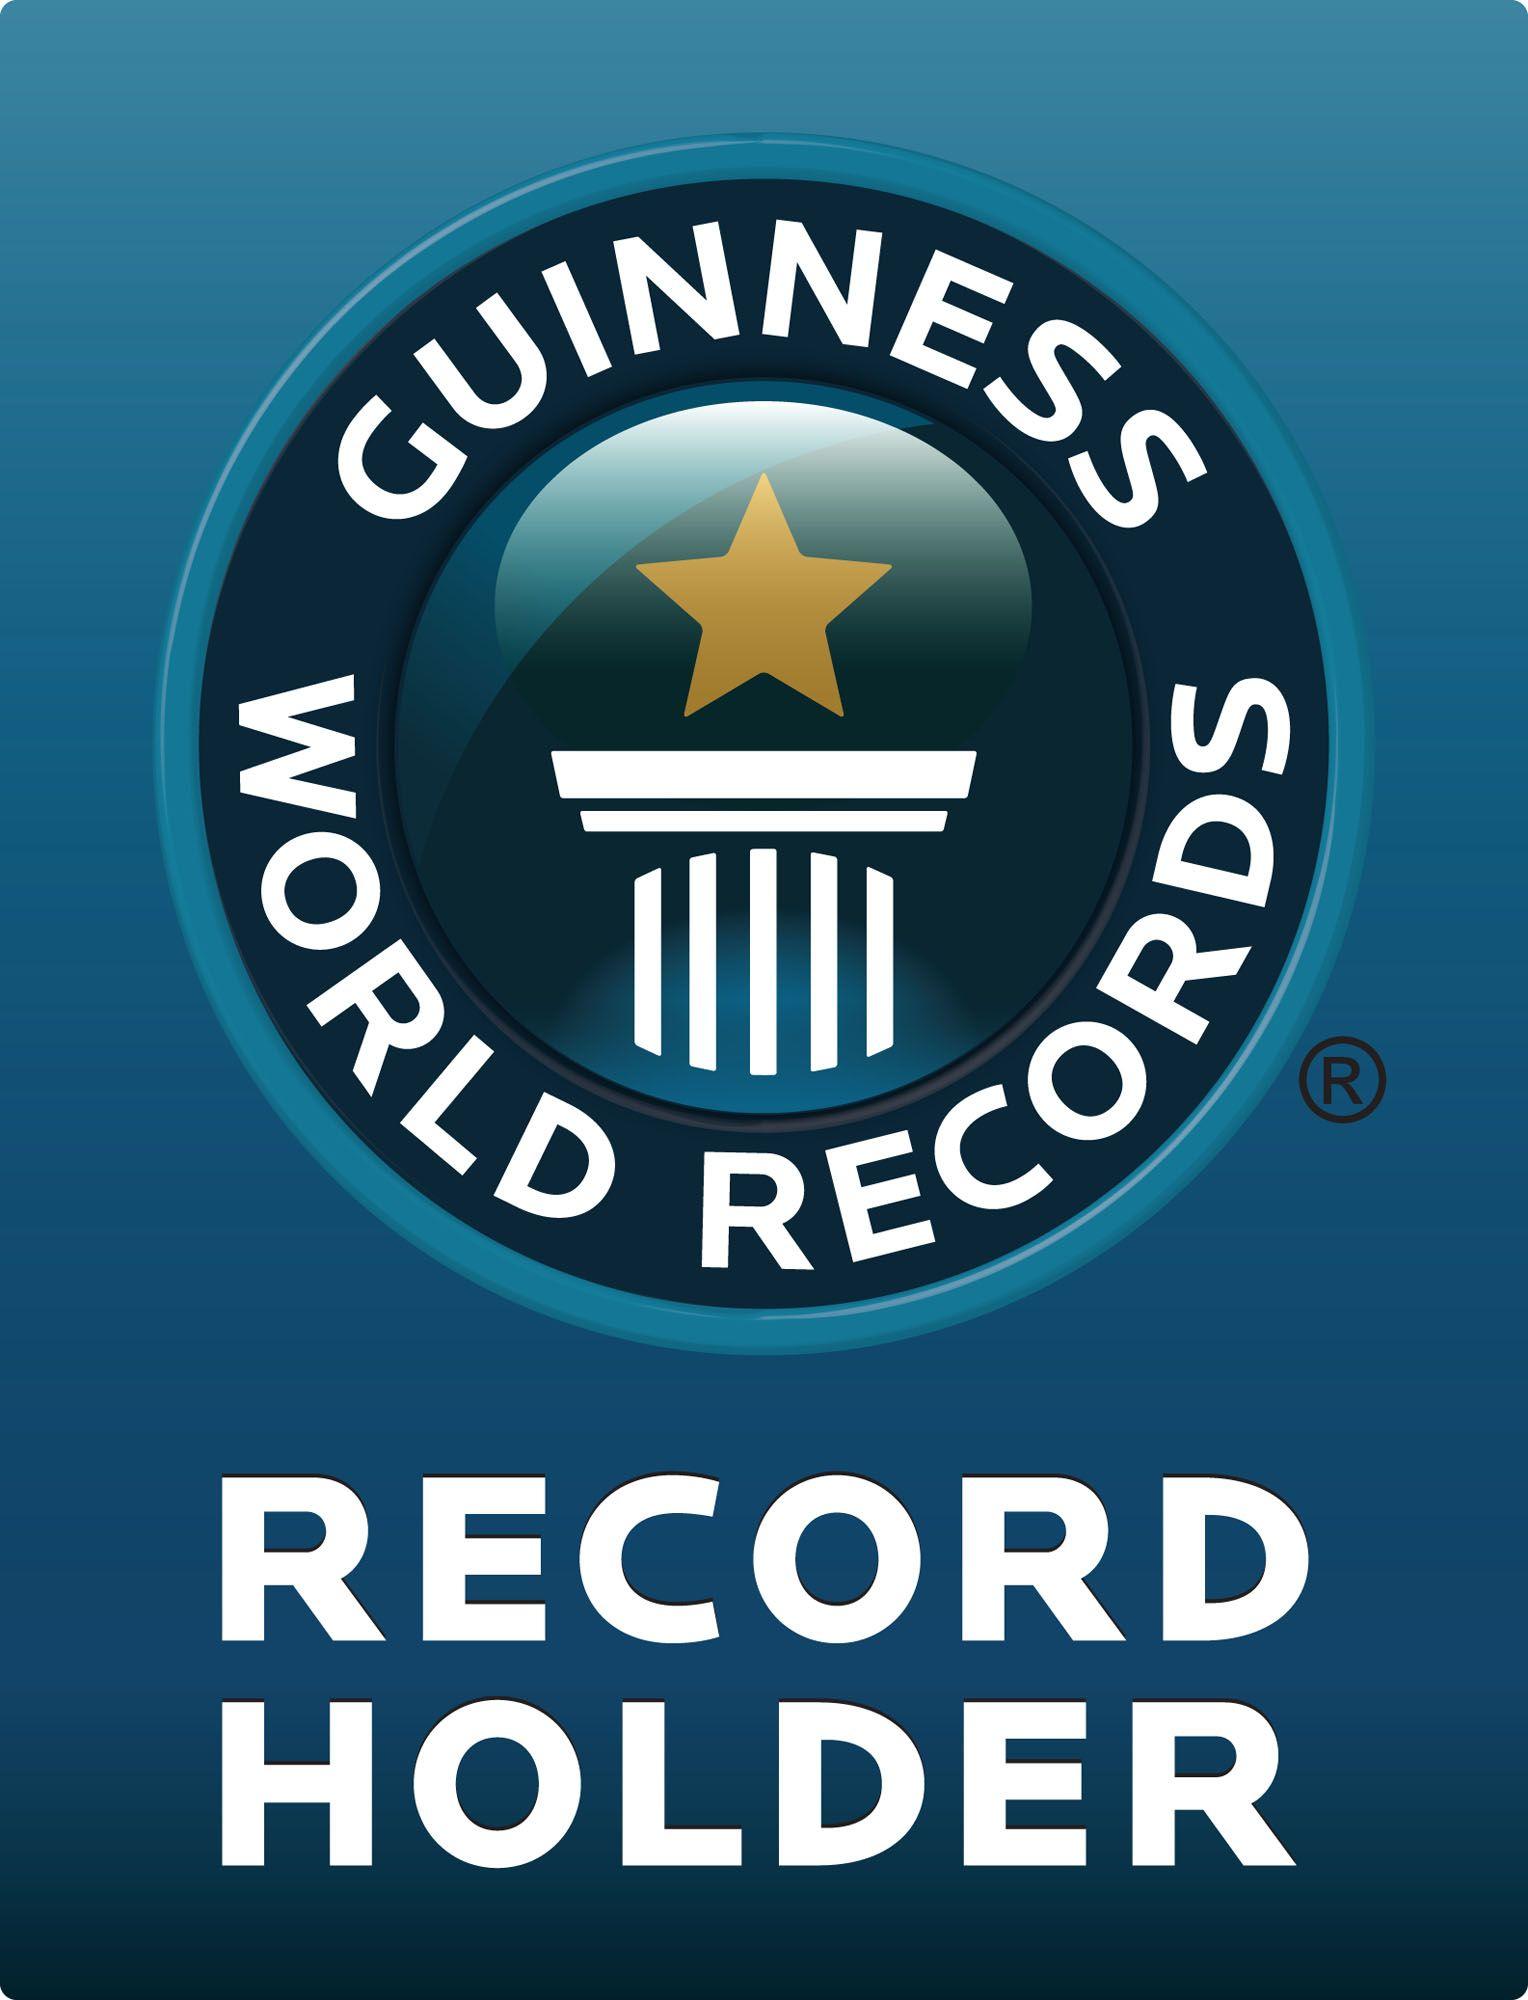 Guinness Book of World Records Logo - LIFE Leadership Breaks Guinness World Record! | Orrin Woodward on ...